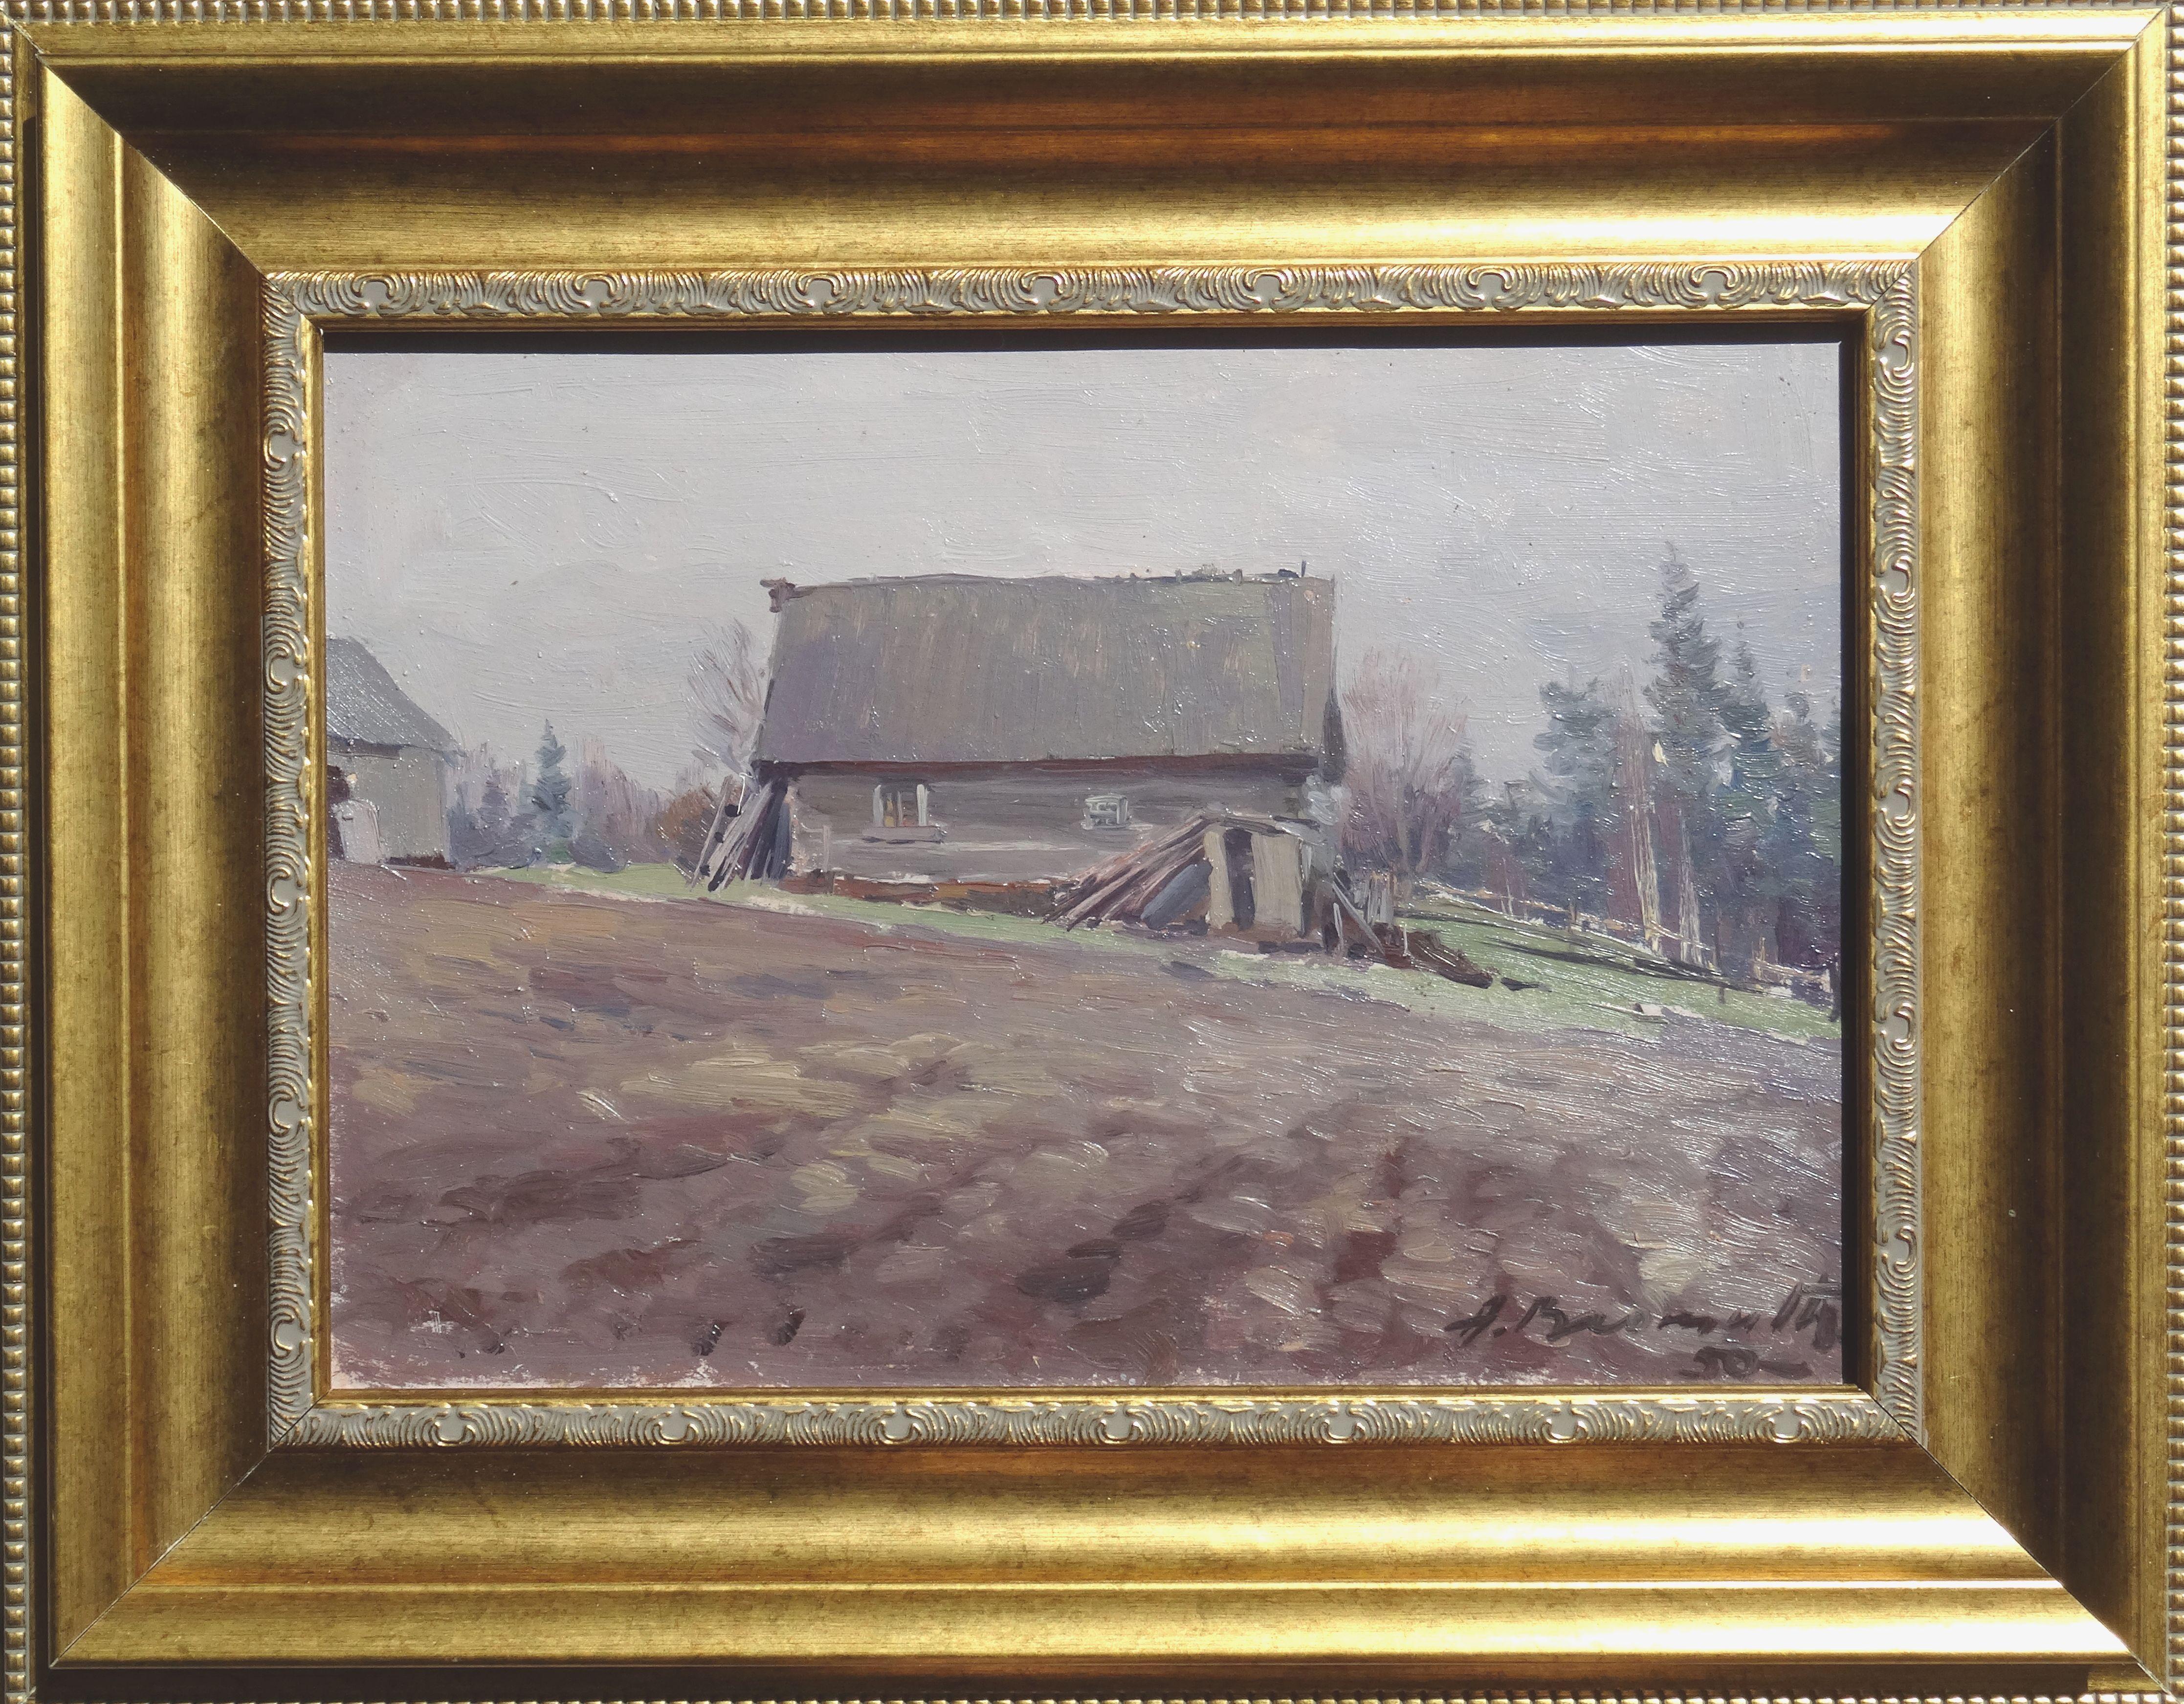  Countryside. 1950s, carton, huile, 26x37 cm - Painting de Alfejs Bromults